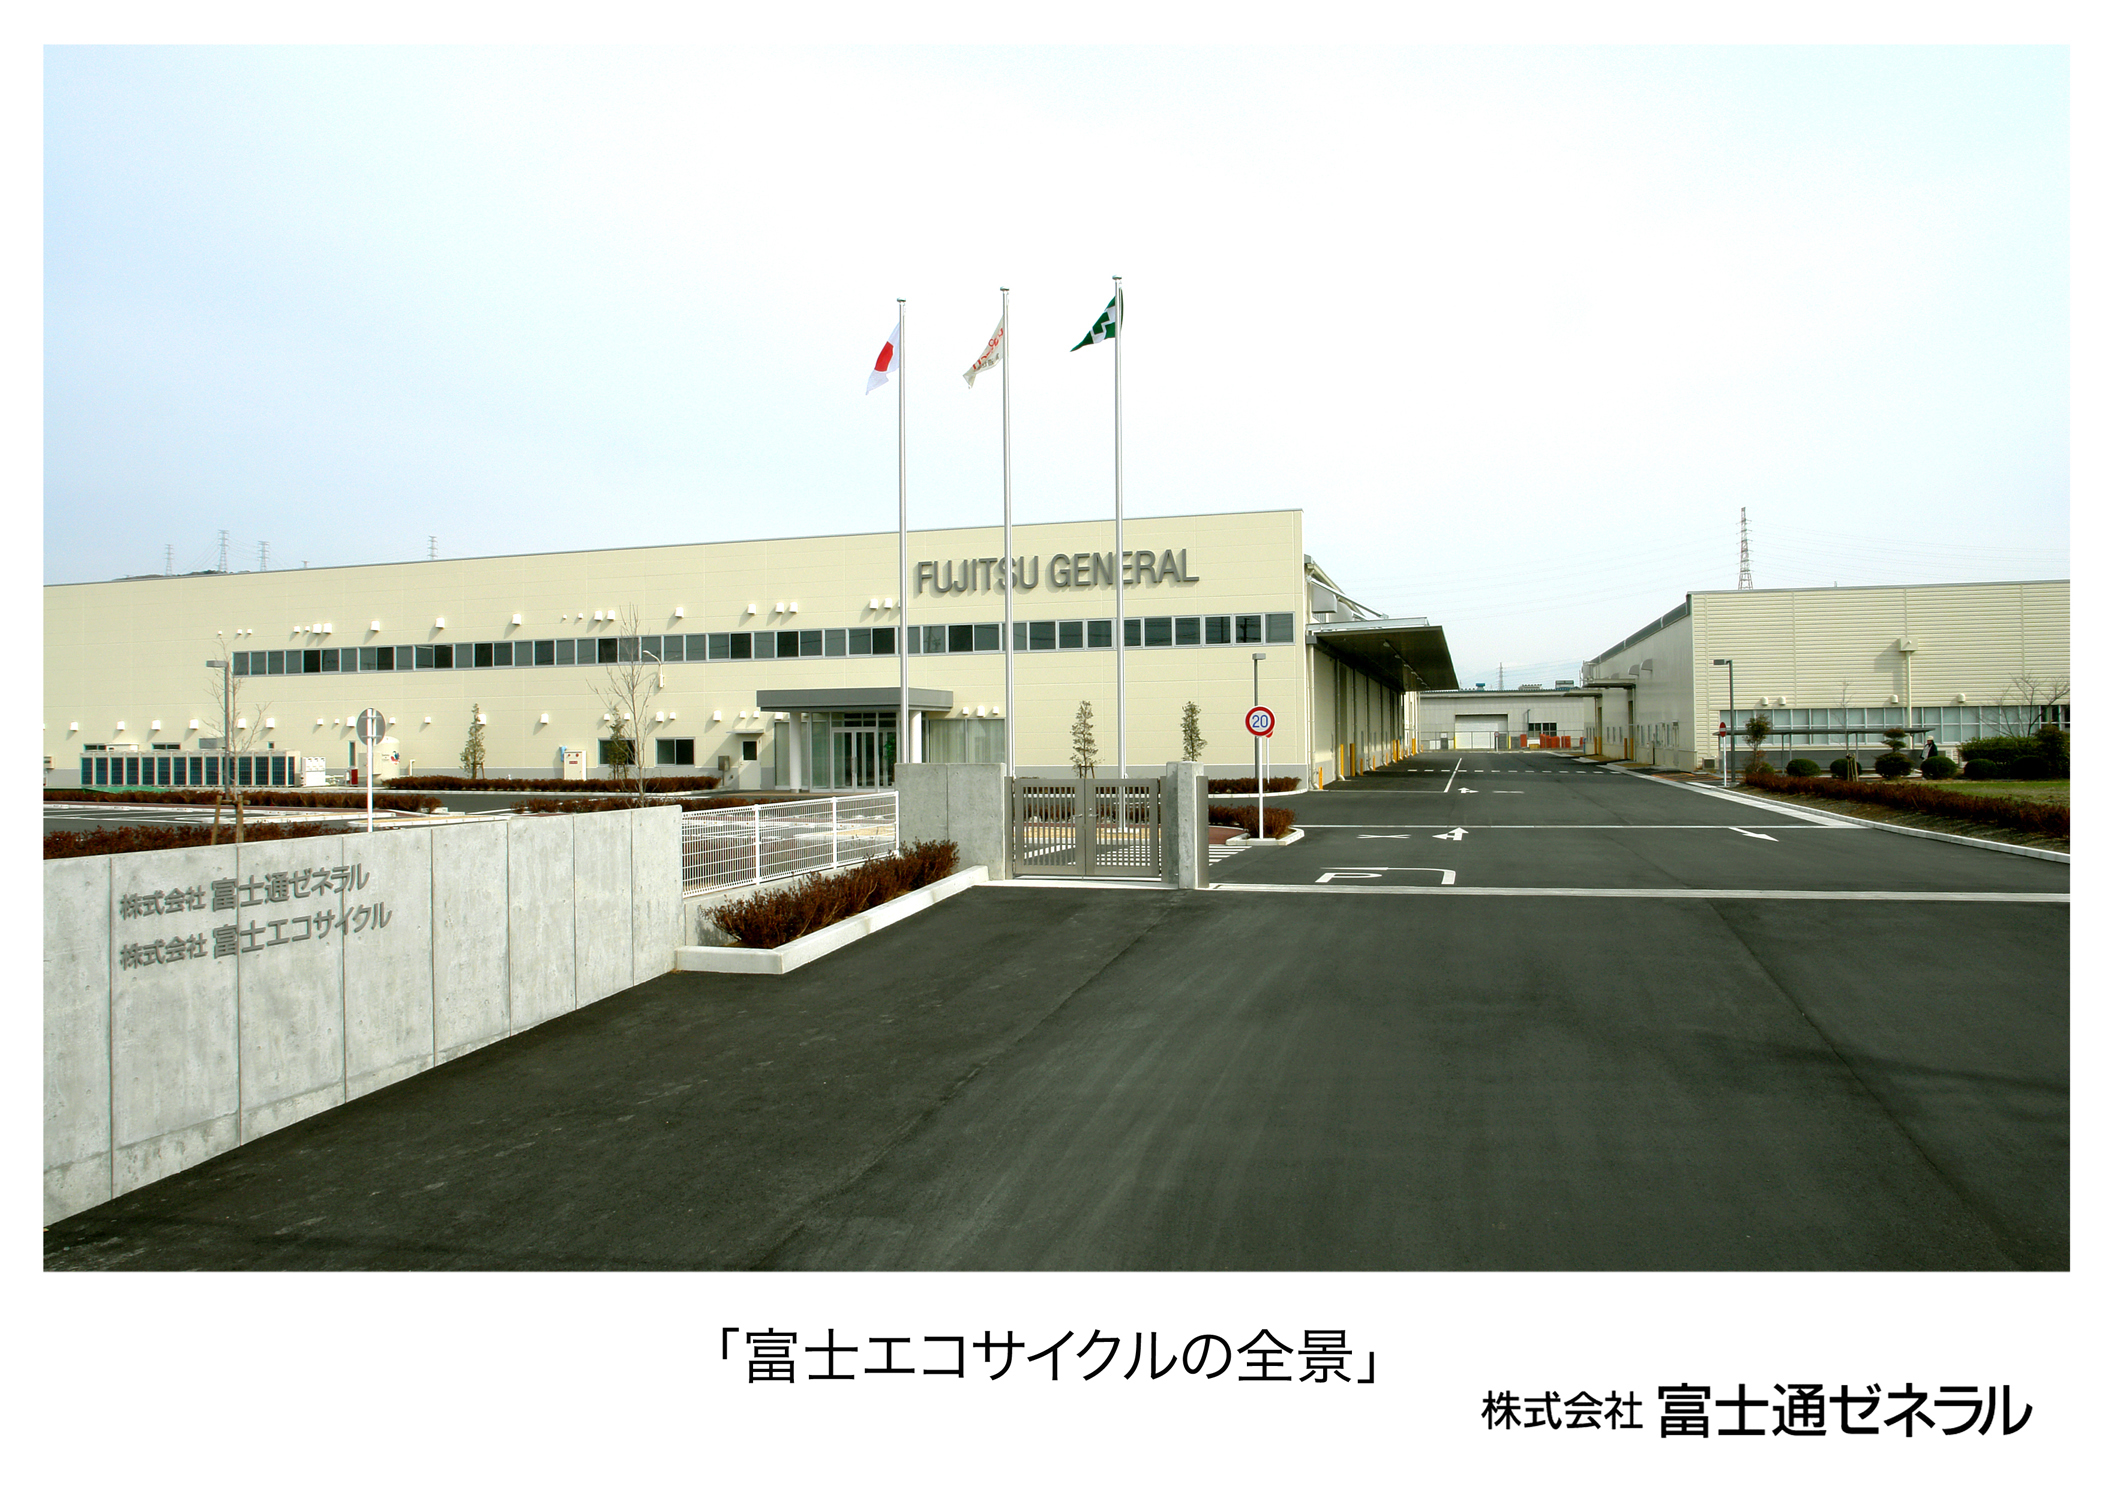 FUJITSU GENERAL Japan - 富士通ゼネラル（株）富士エコサイクル 浜松新工場へ移転